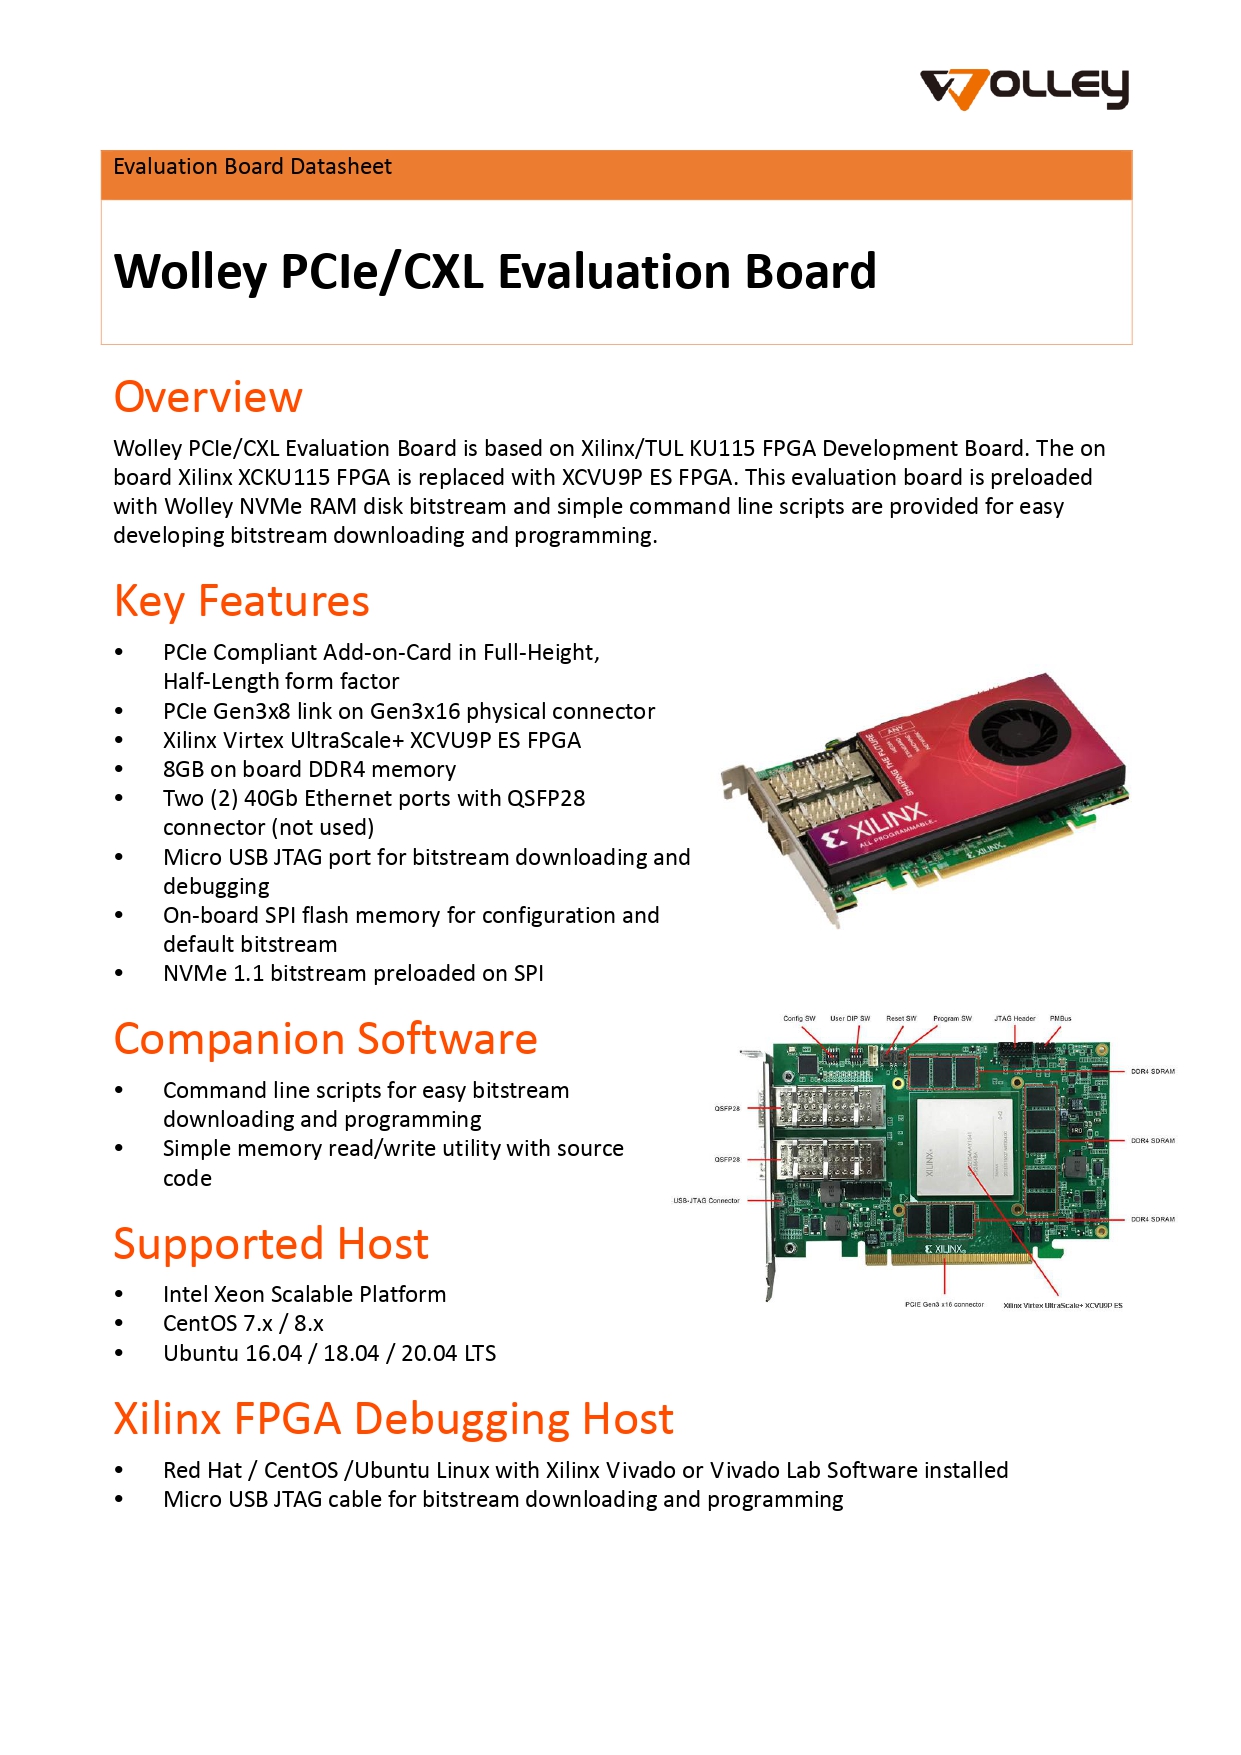 Wolley PCIe CXL evaluation board